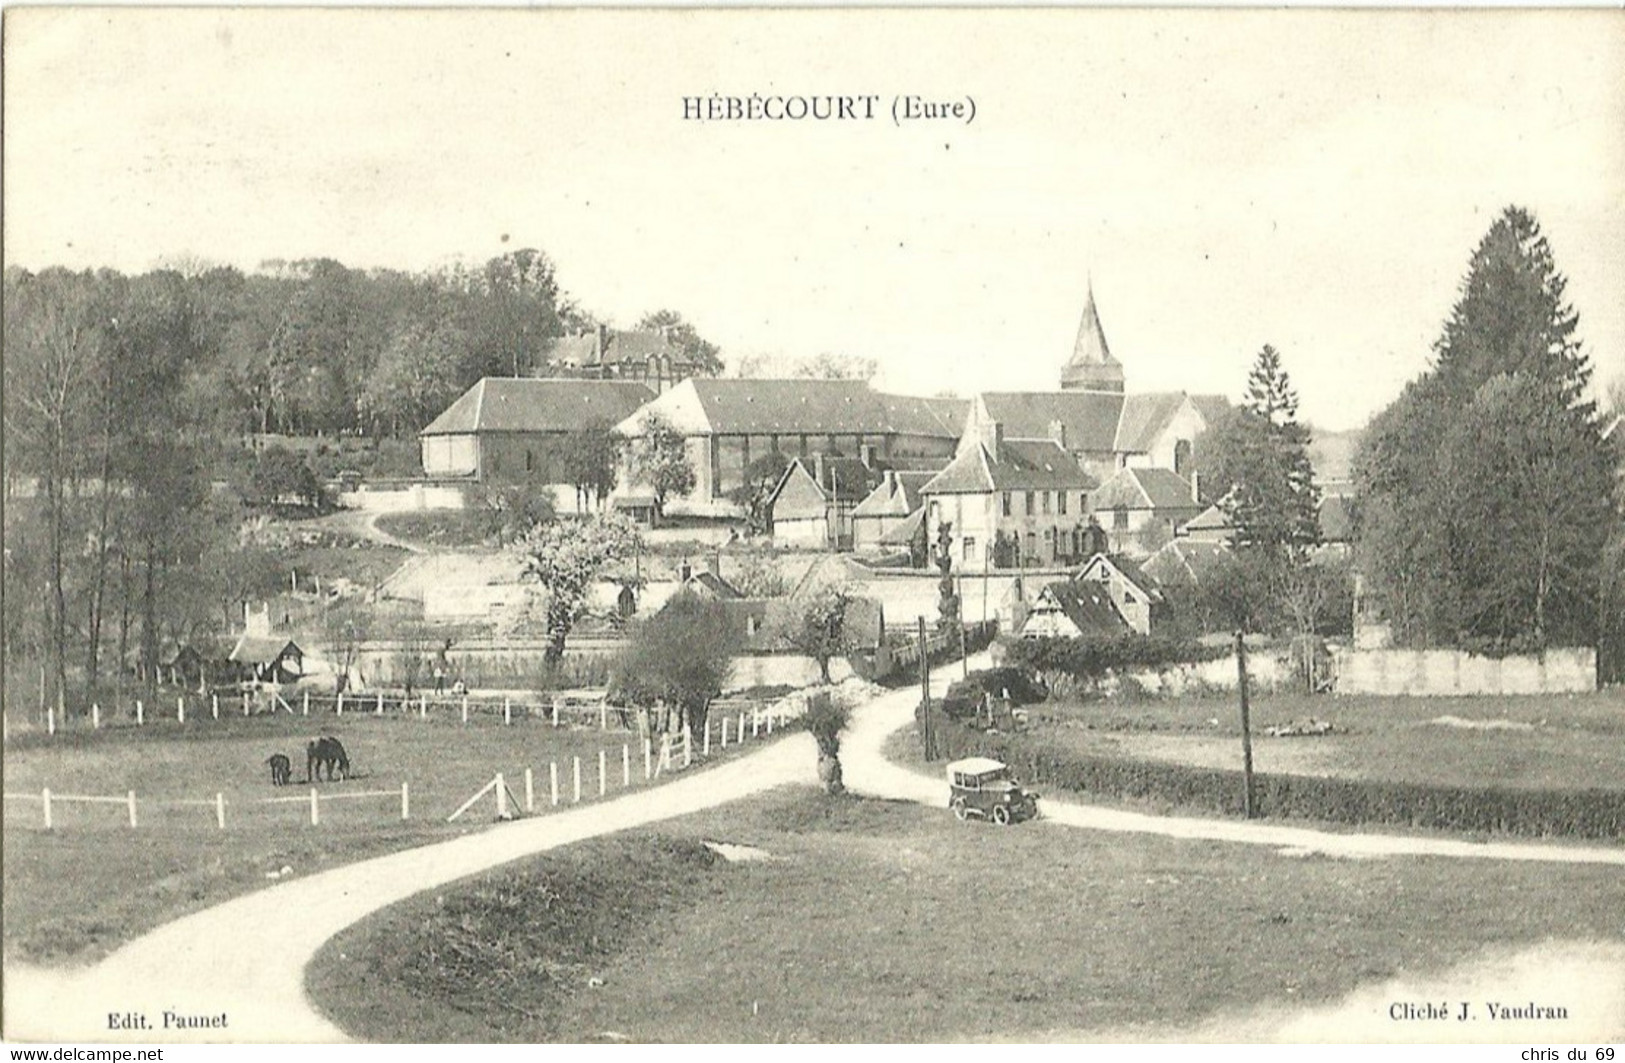 Hebecourt Eure - Hébécourt